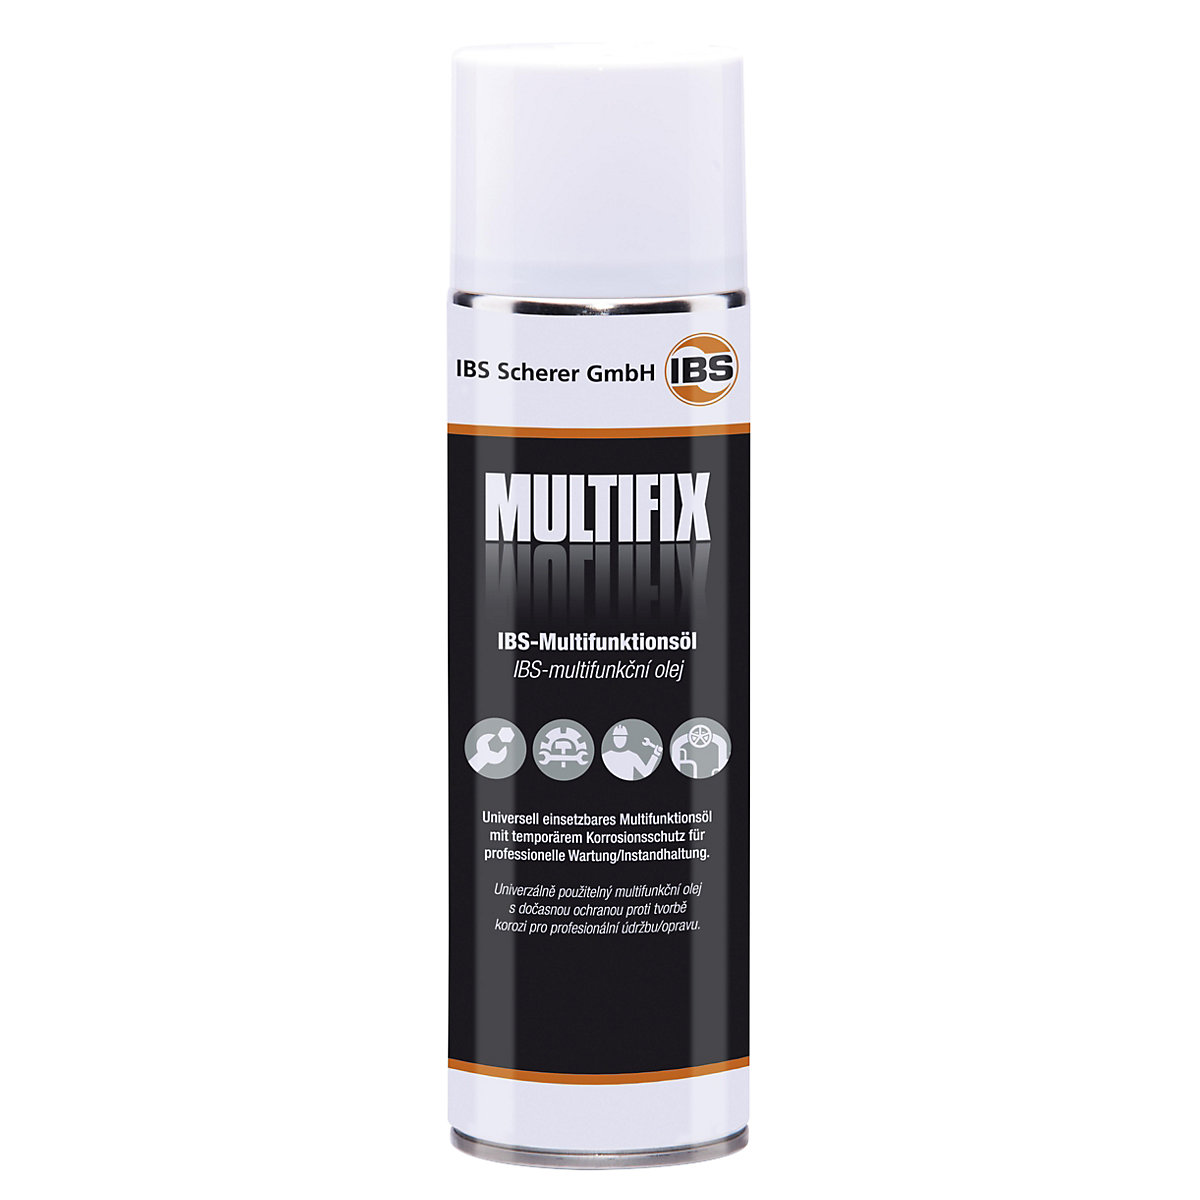 MULTIFIX multifunction oil – IBS Scherer